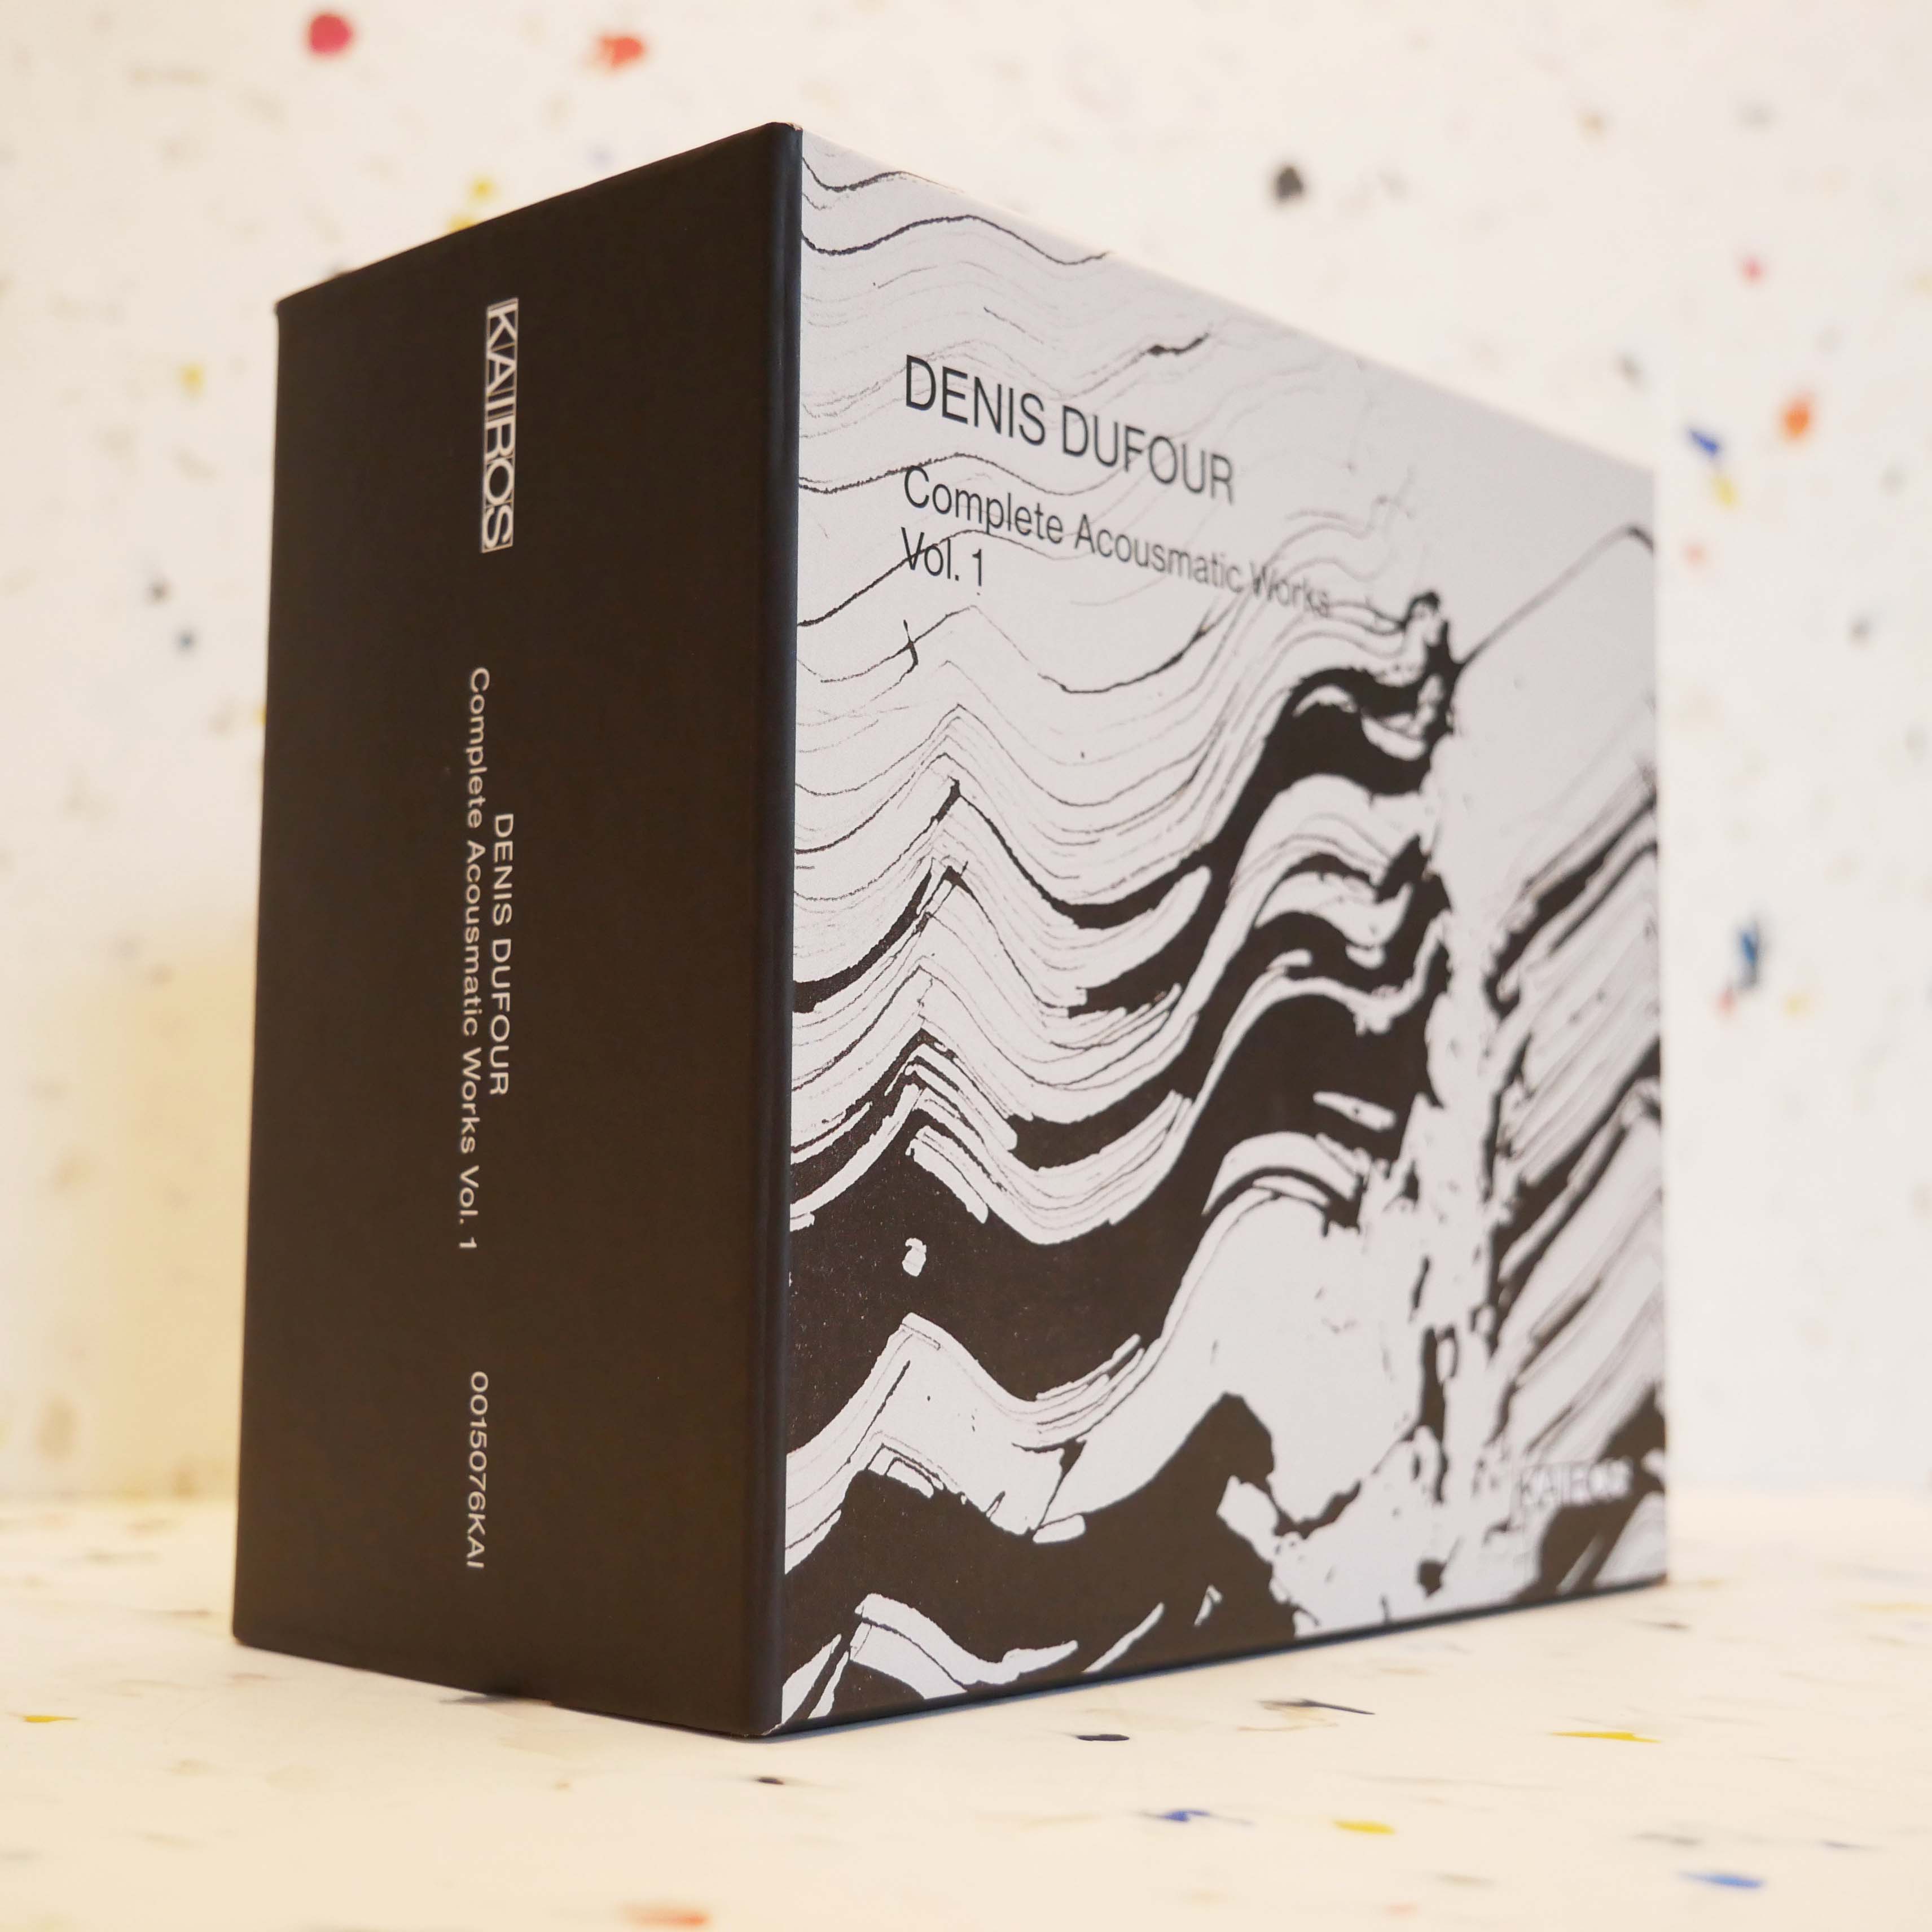 【KAIROS】 DENIS DUFOUR - COMPLETE ACOUSTIC WORKS VOL.1 CD / 16枚組ボックスセット